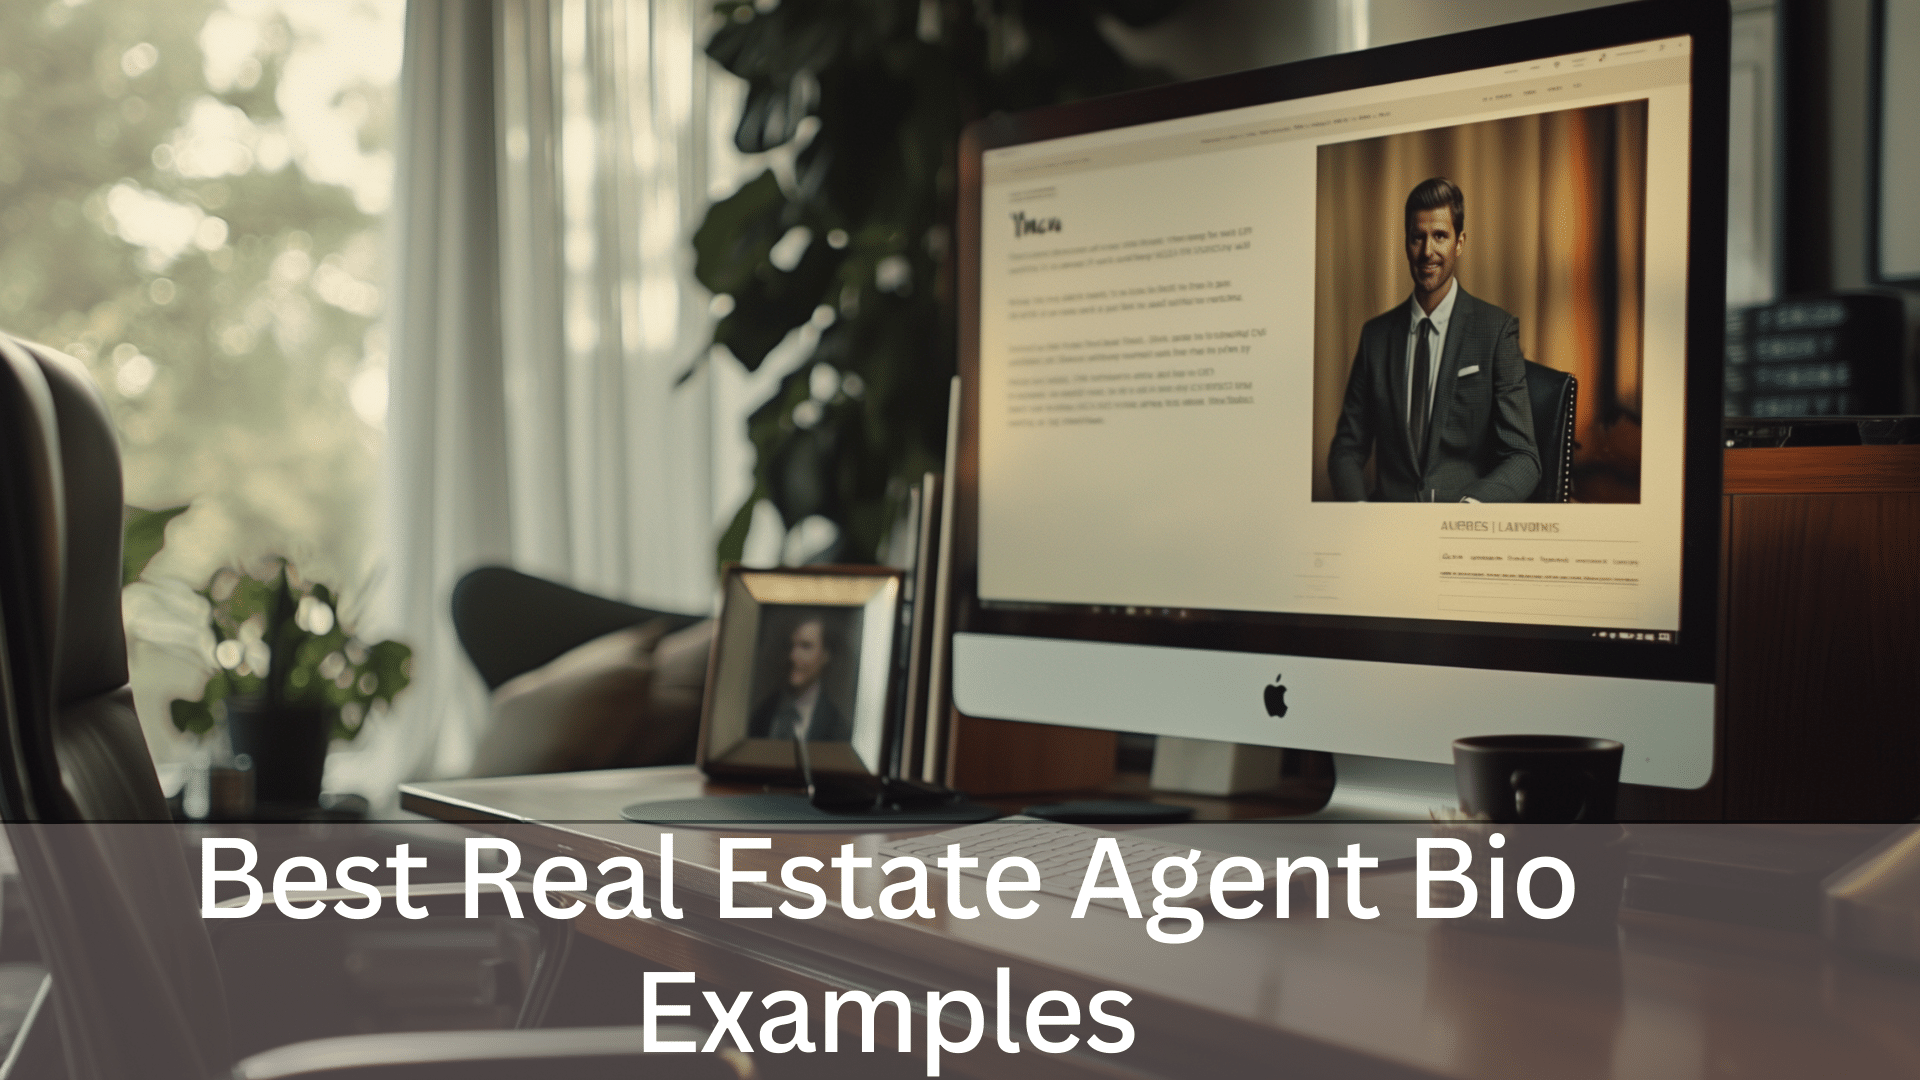 Best real estate agent bio examples illustration